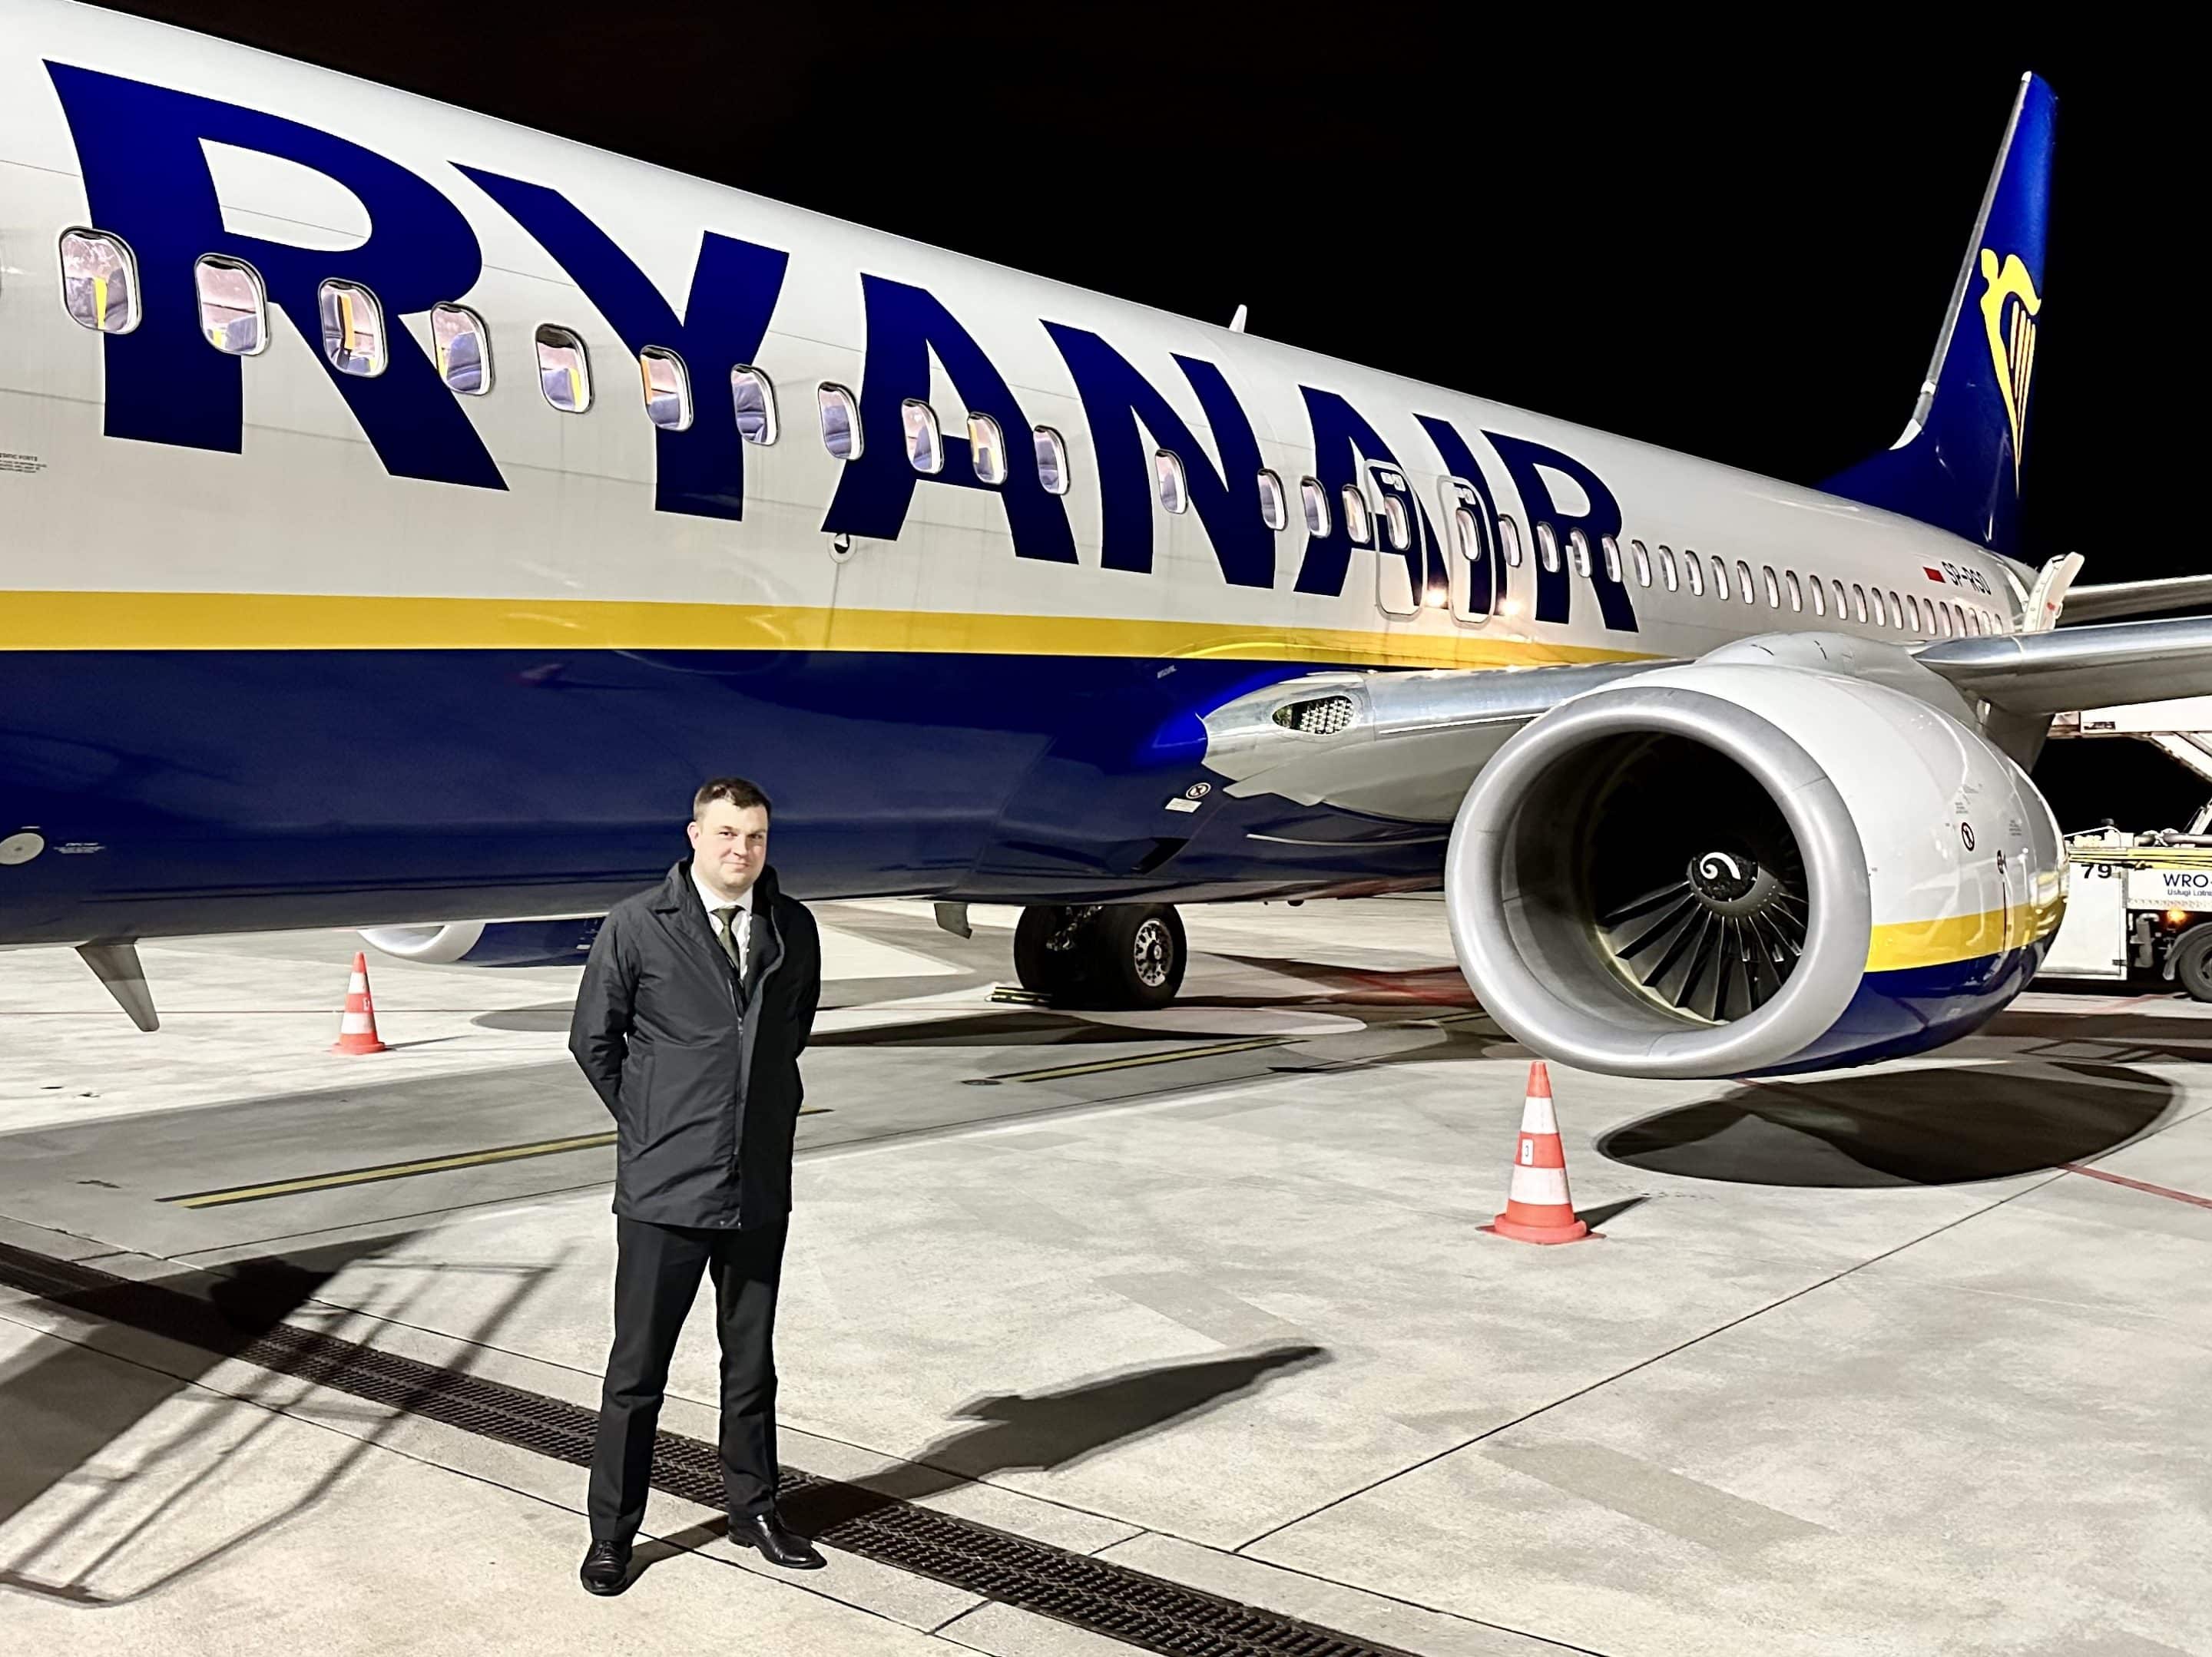 Bartolini Air CFI joins Ryanair as Direct Entry Captain